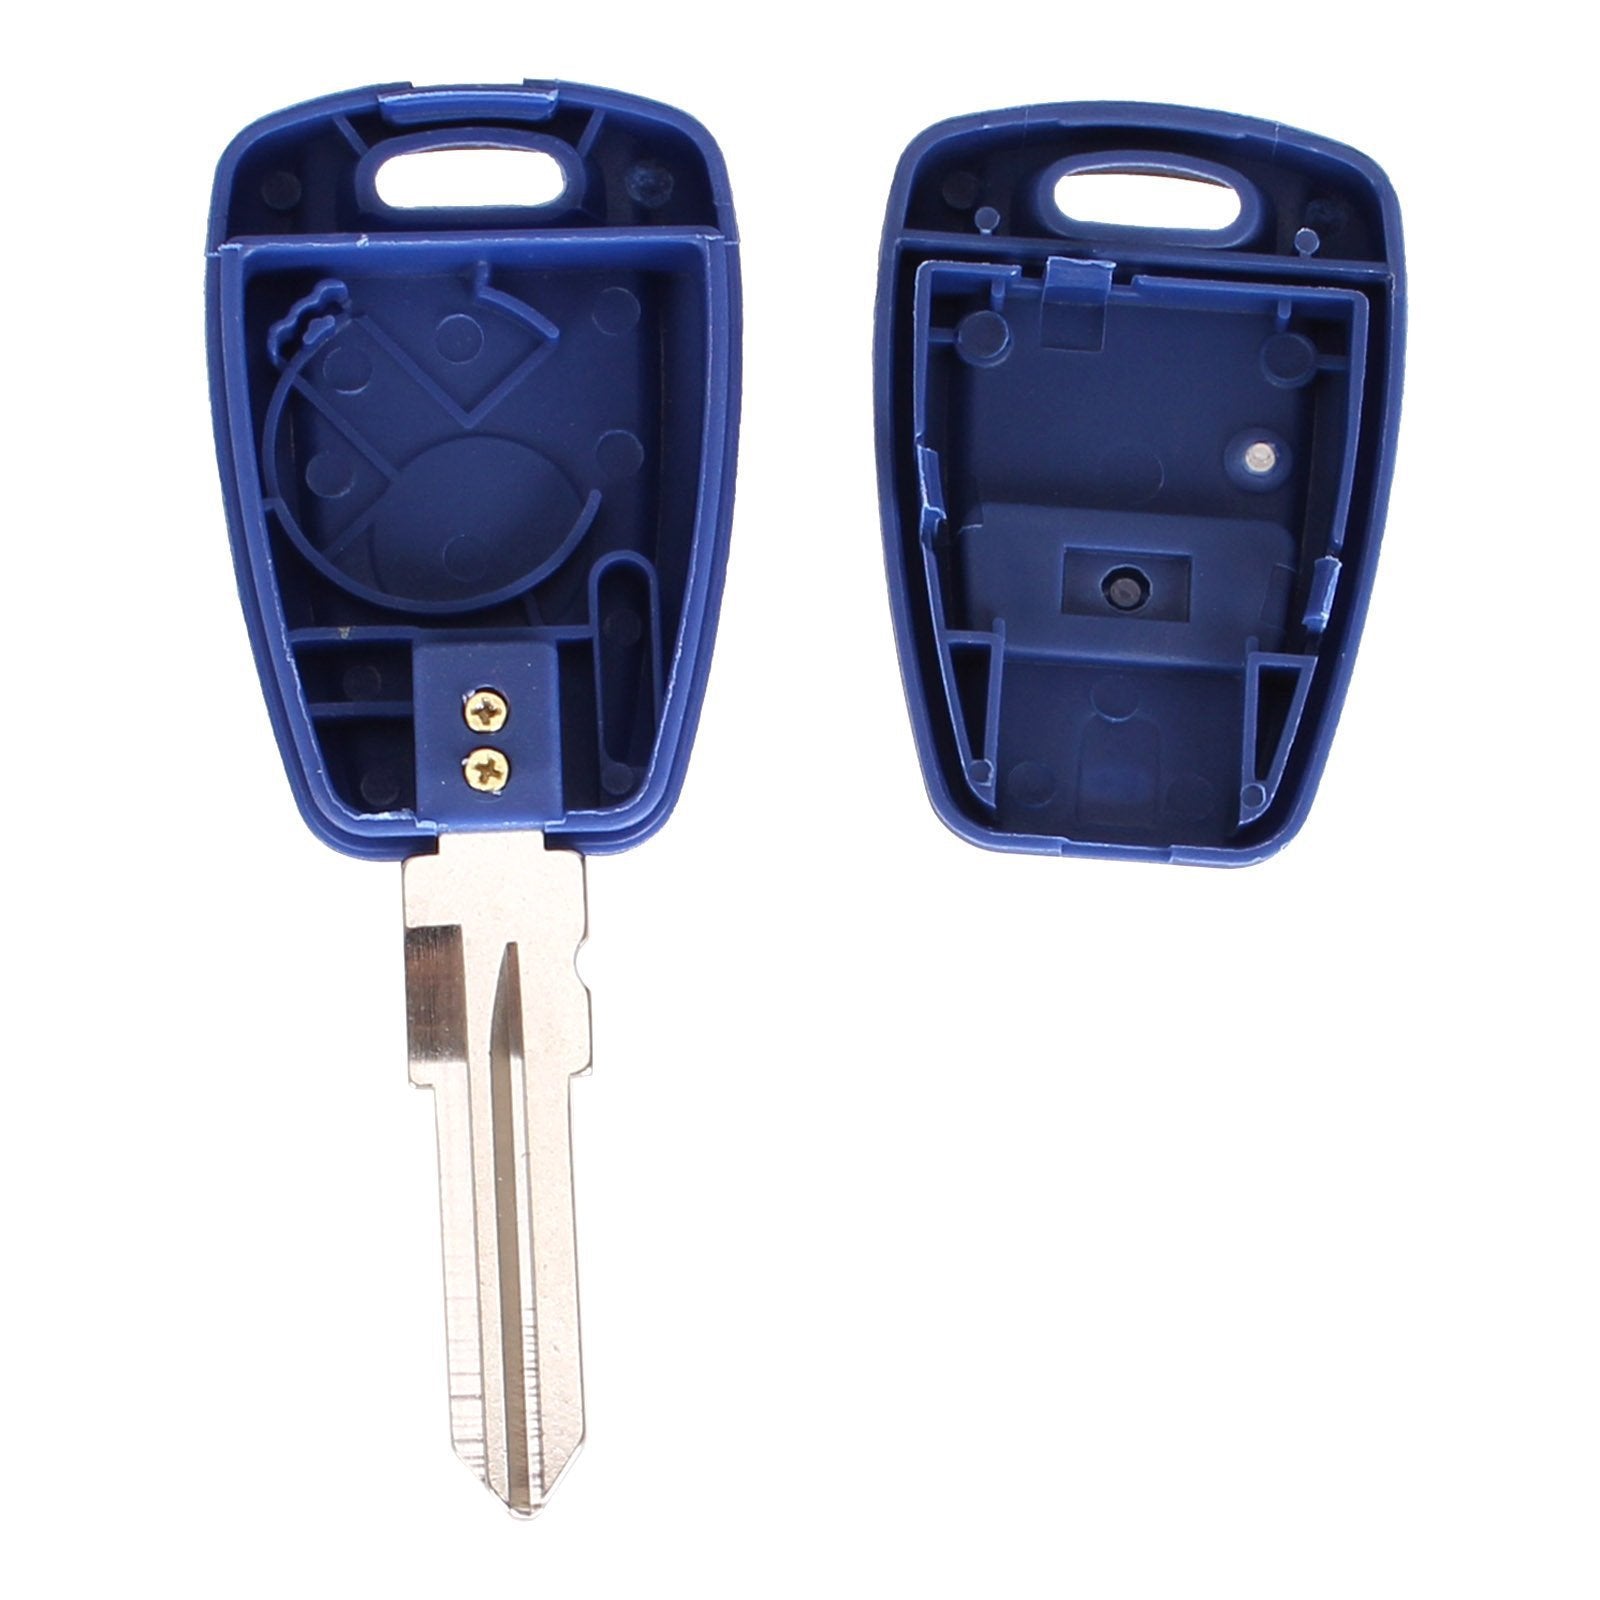 Kék színű, 1 gombos Fiat kulcs, kulcsház belseje. GT15R kulcsszárral.